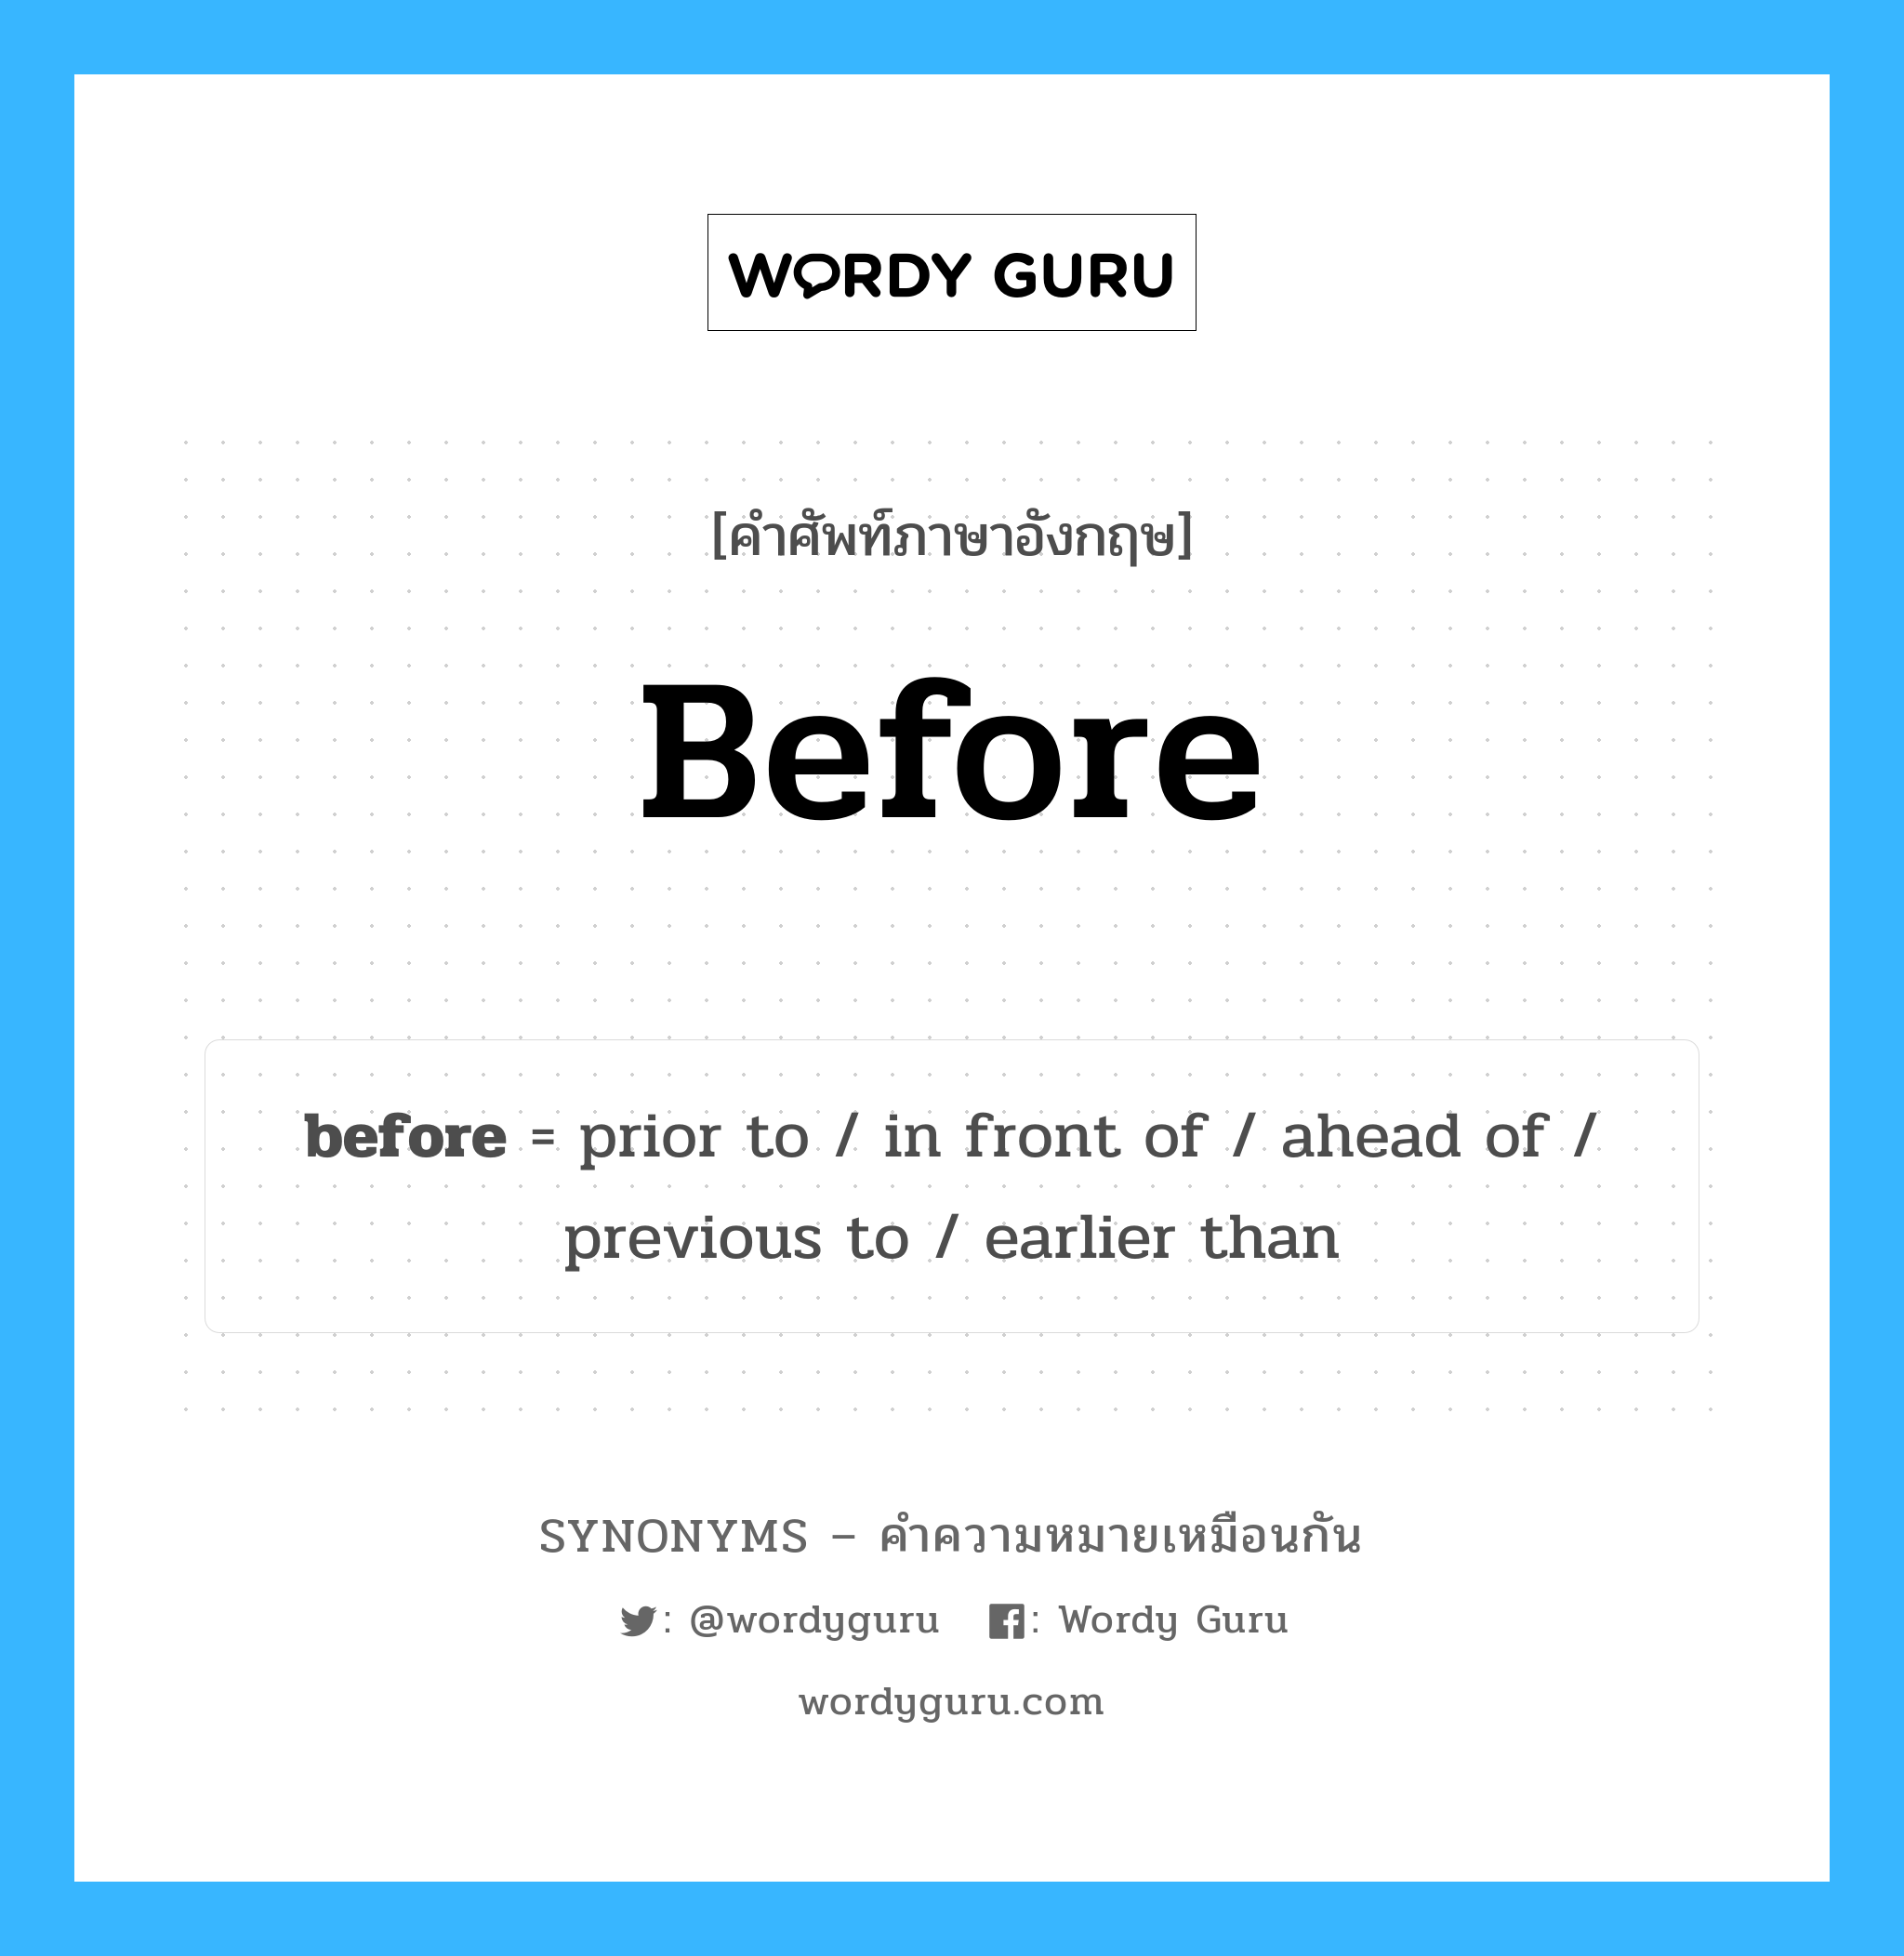 before เป็นหนึ่งใน prior to และมีคำอื่น ๆ อีกดังนี้, คำศัพท์ภาษาอังกฤษ before ความหมายคล้ายกันกับ prior to แปลว่า ก่อนที่จะ หมวด prior to